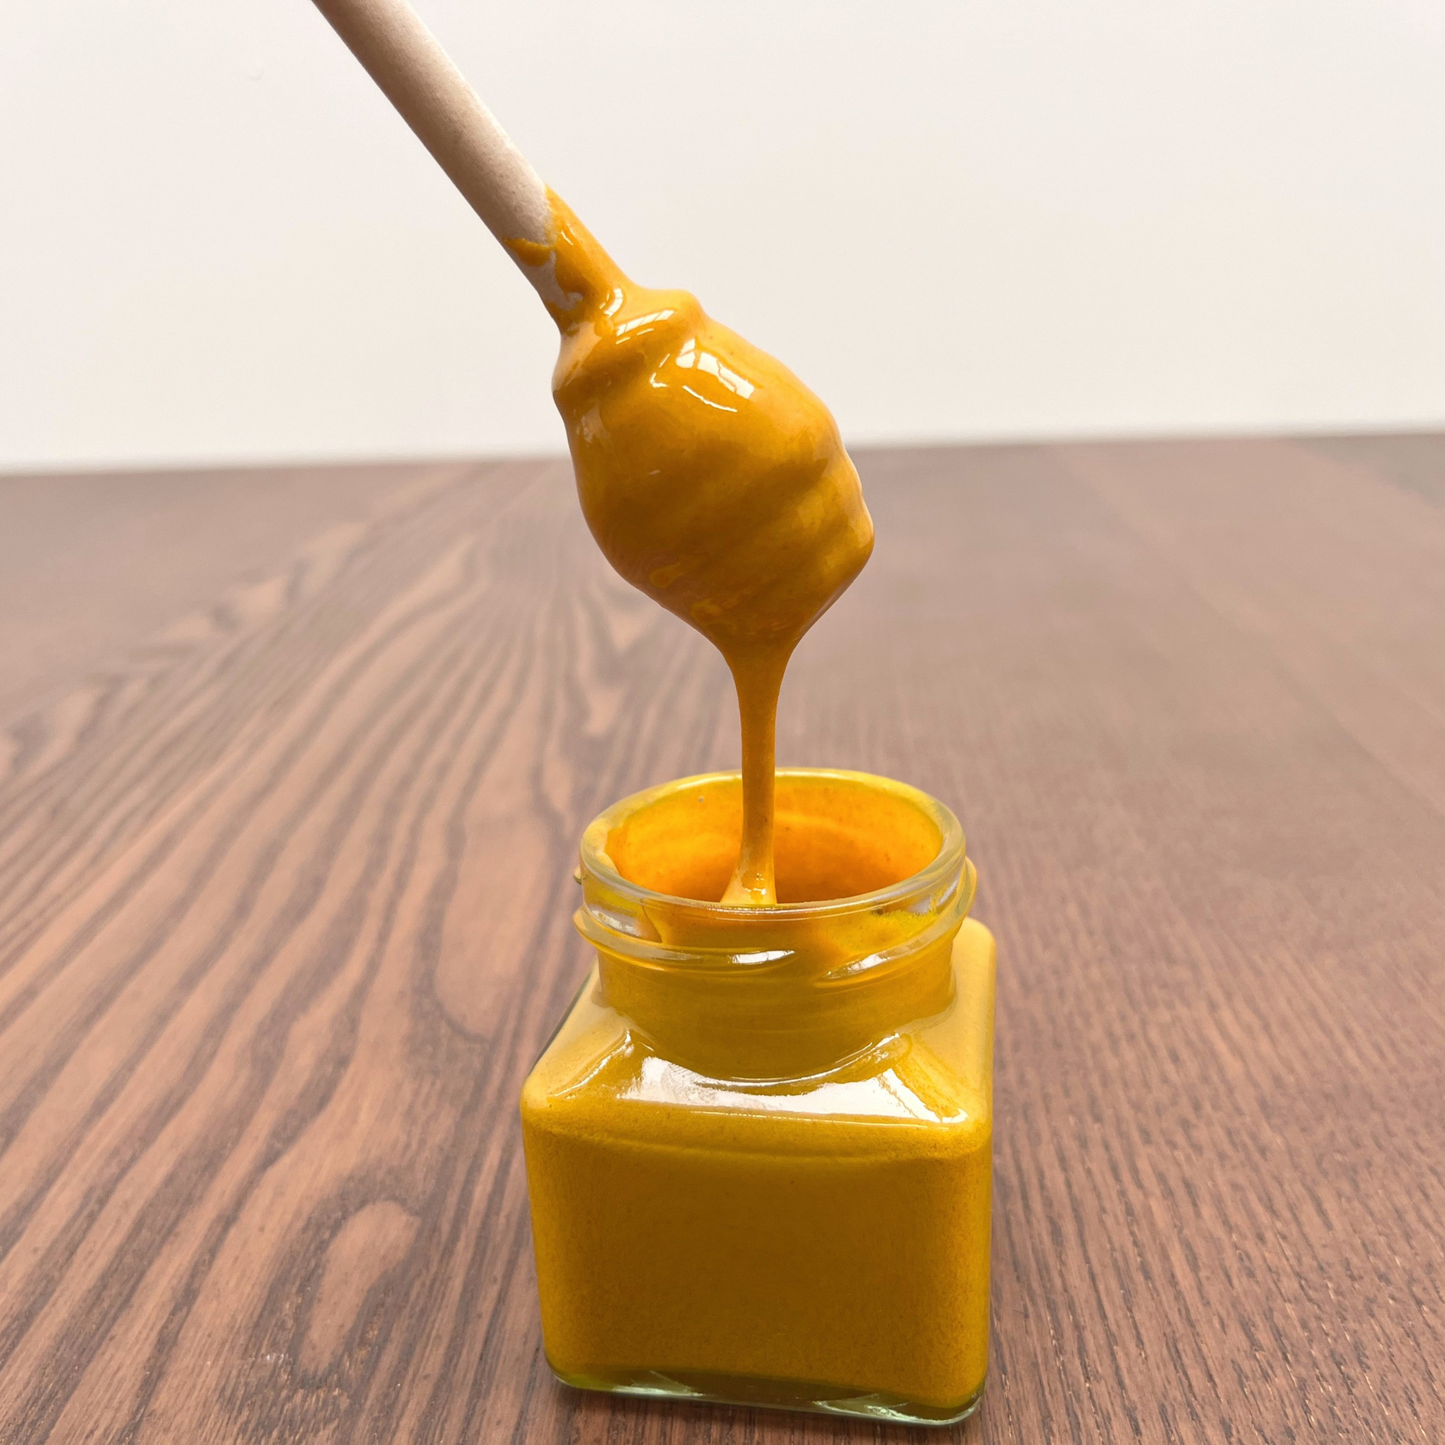 DrSheikh Medicinal Grade Honey + TURMERIC